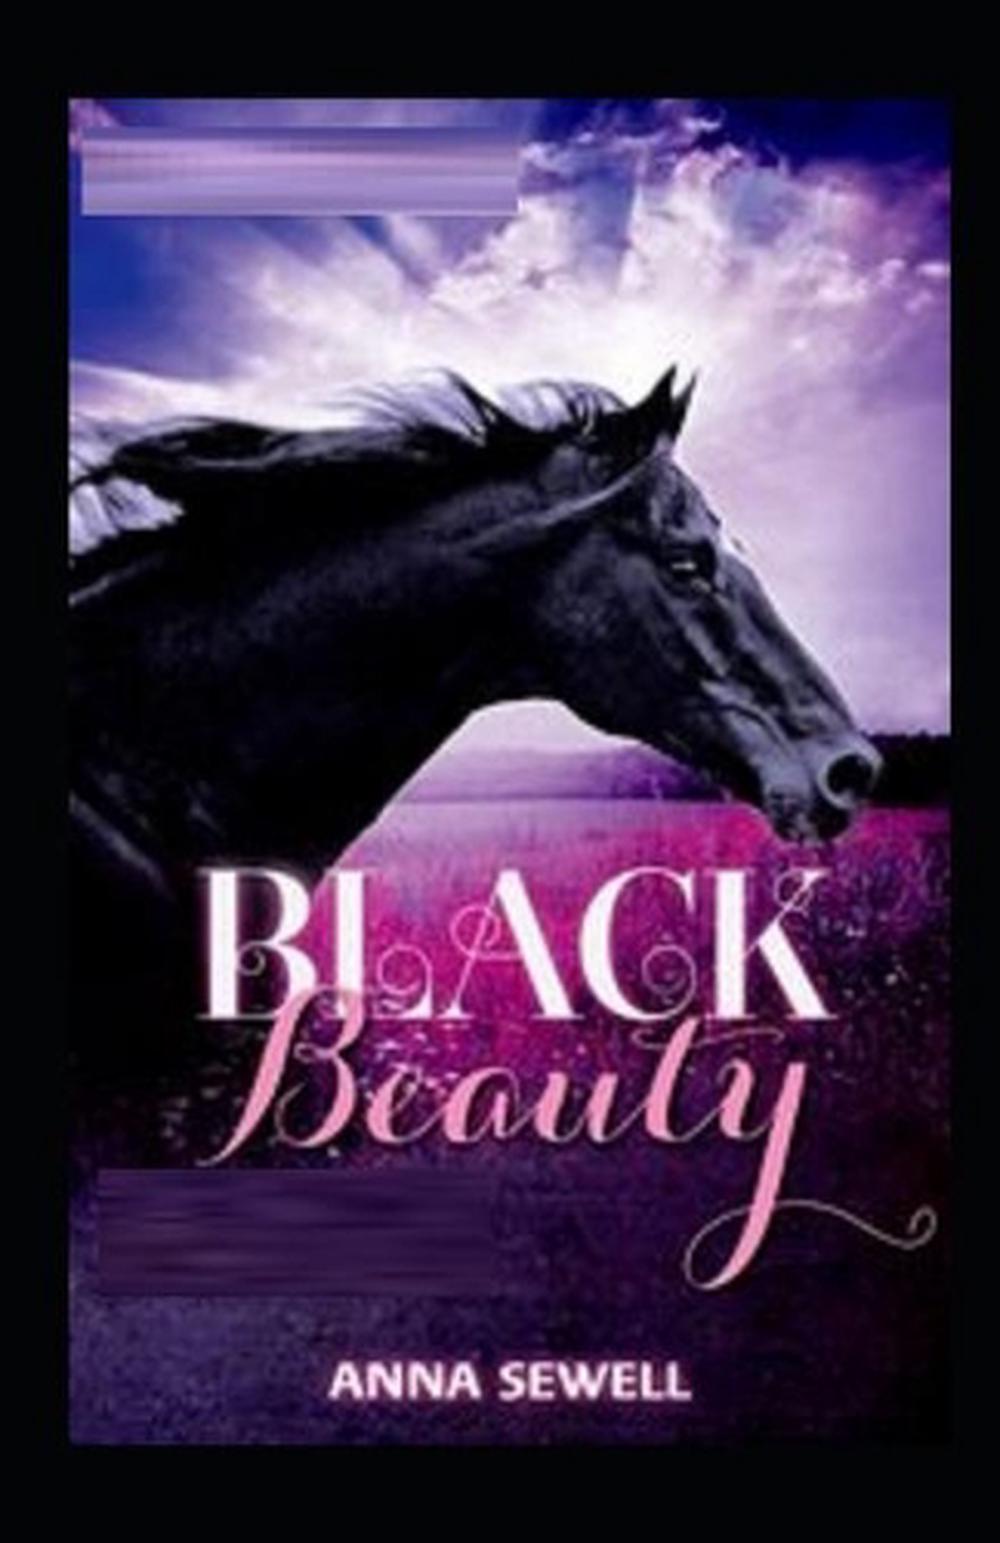 black beauty original book